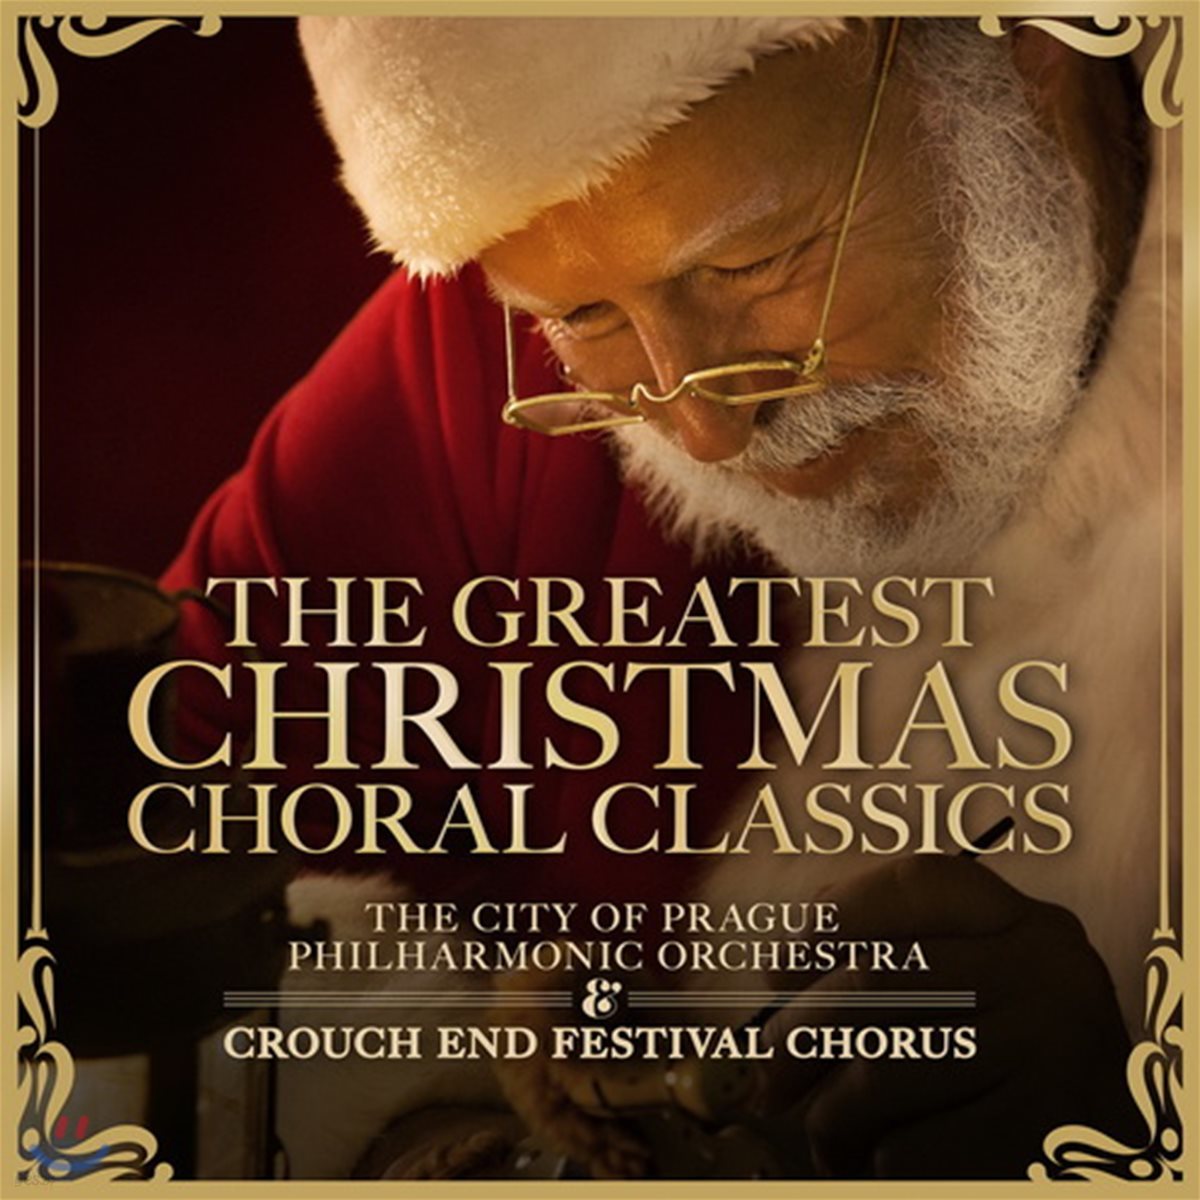 The Greatest Christmas Choral Classics (세상의 가장 아름다운 울림, 합창으로 노래하는 크리스마스 캐럴)